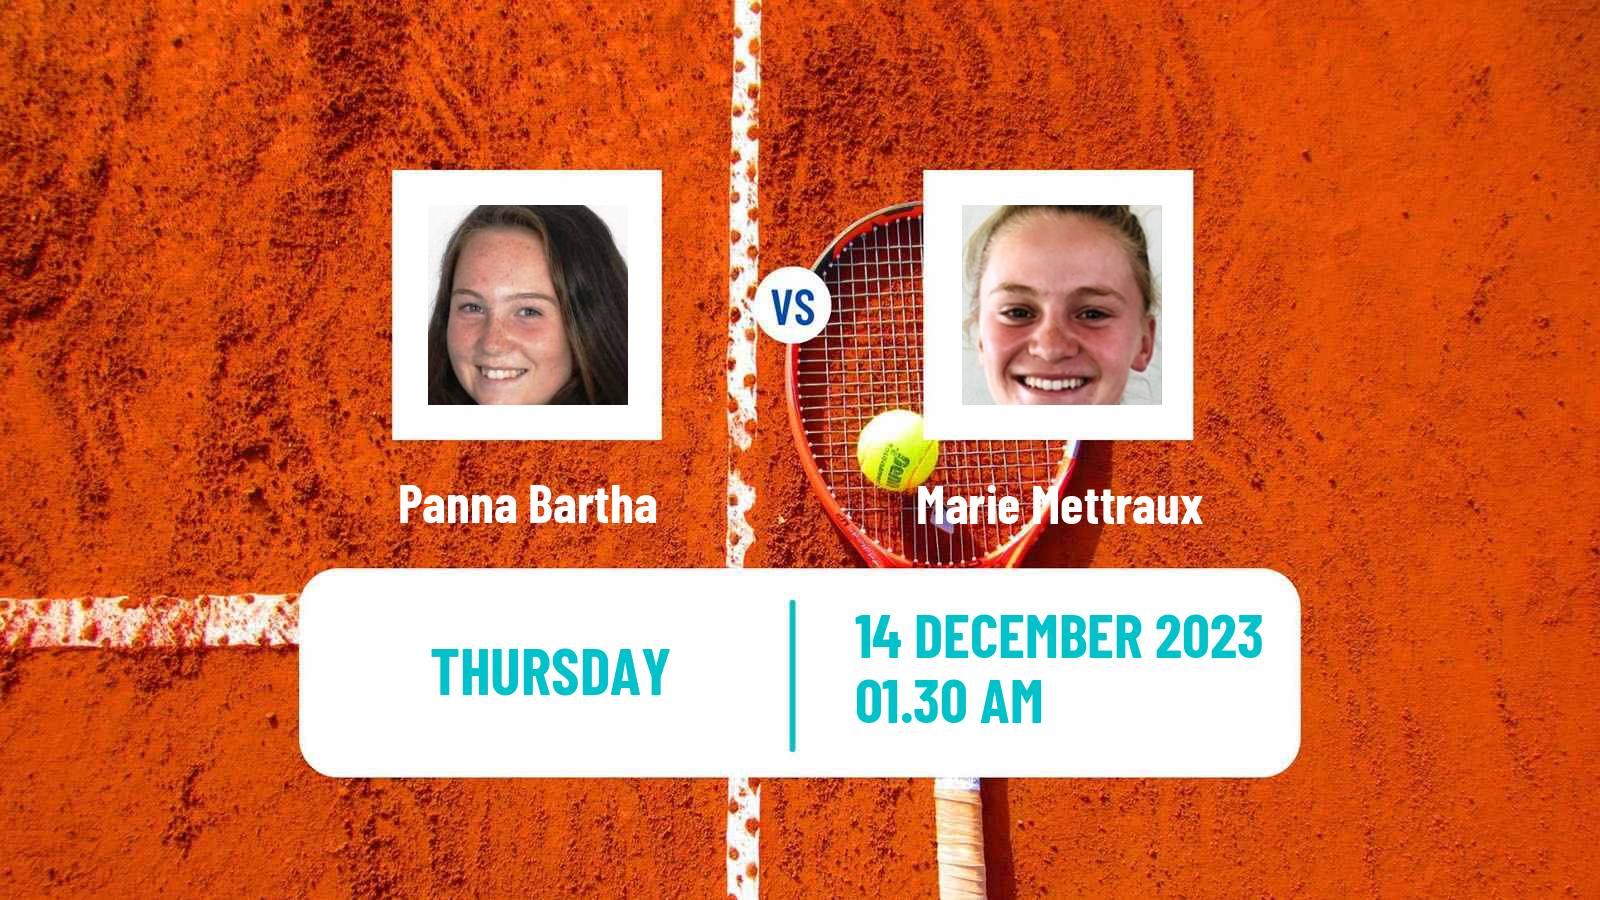 Tennis ITF W15 Antalya 22 Women Panna Bartha - Marie Mettraux